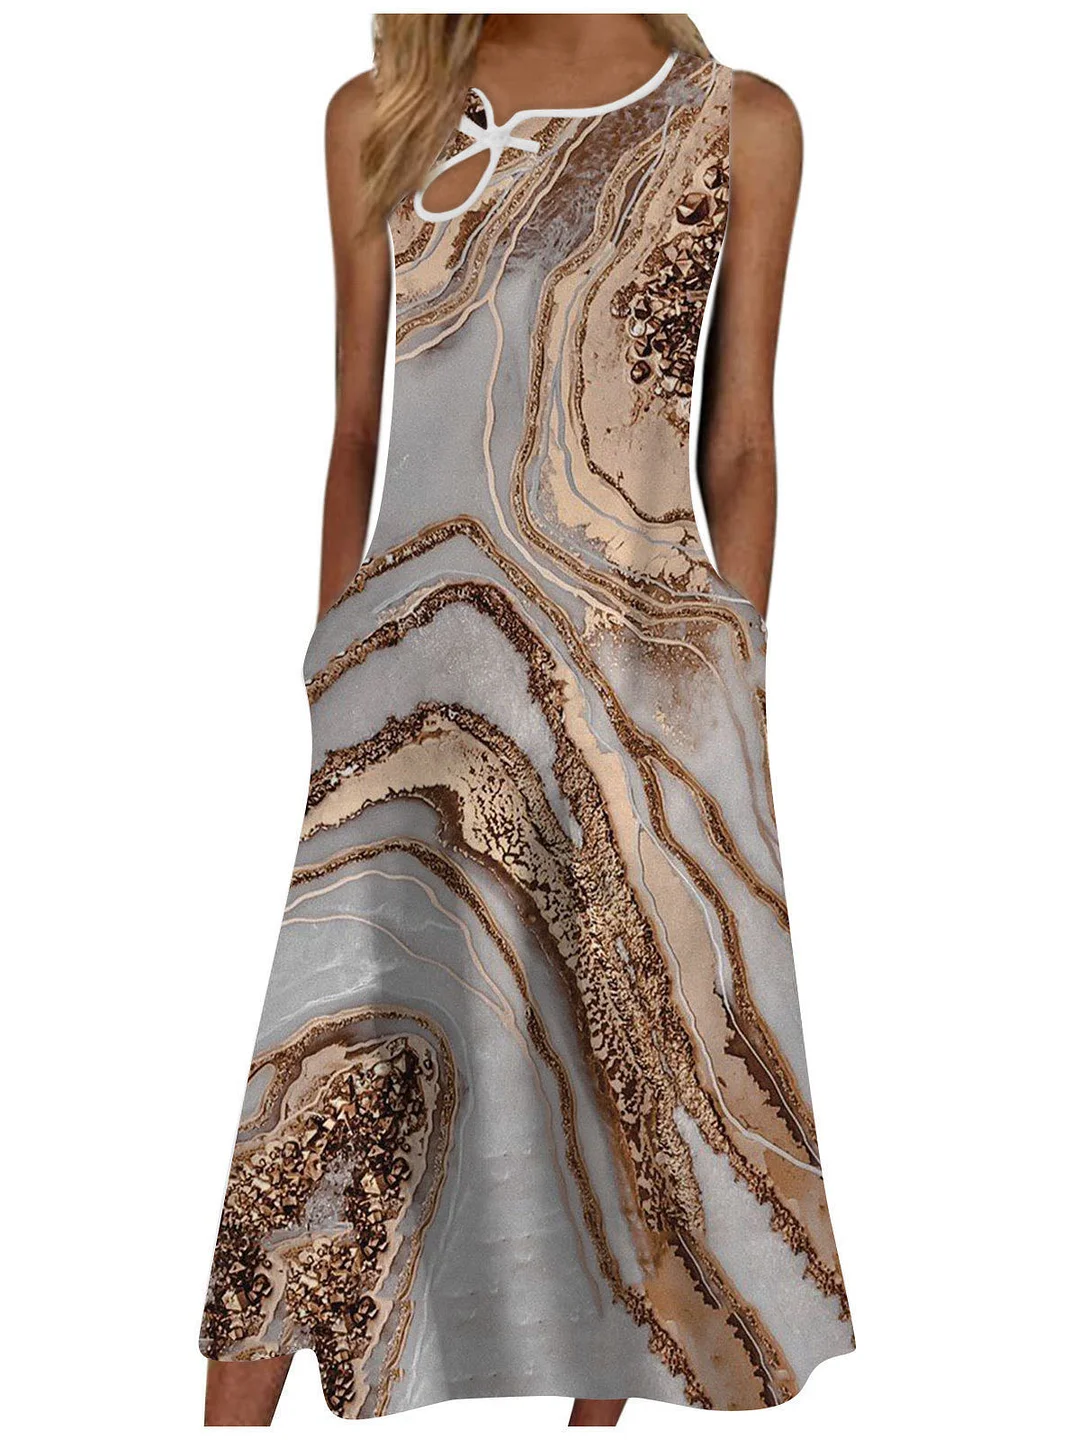 Women's Sleeveless Scoop Neck Gradient Printed Casual Pocket Dress